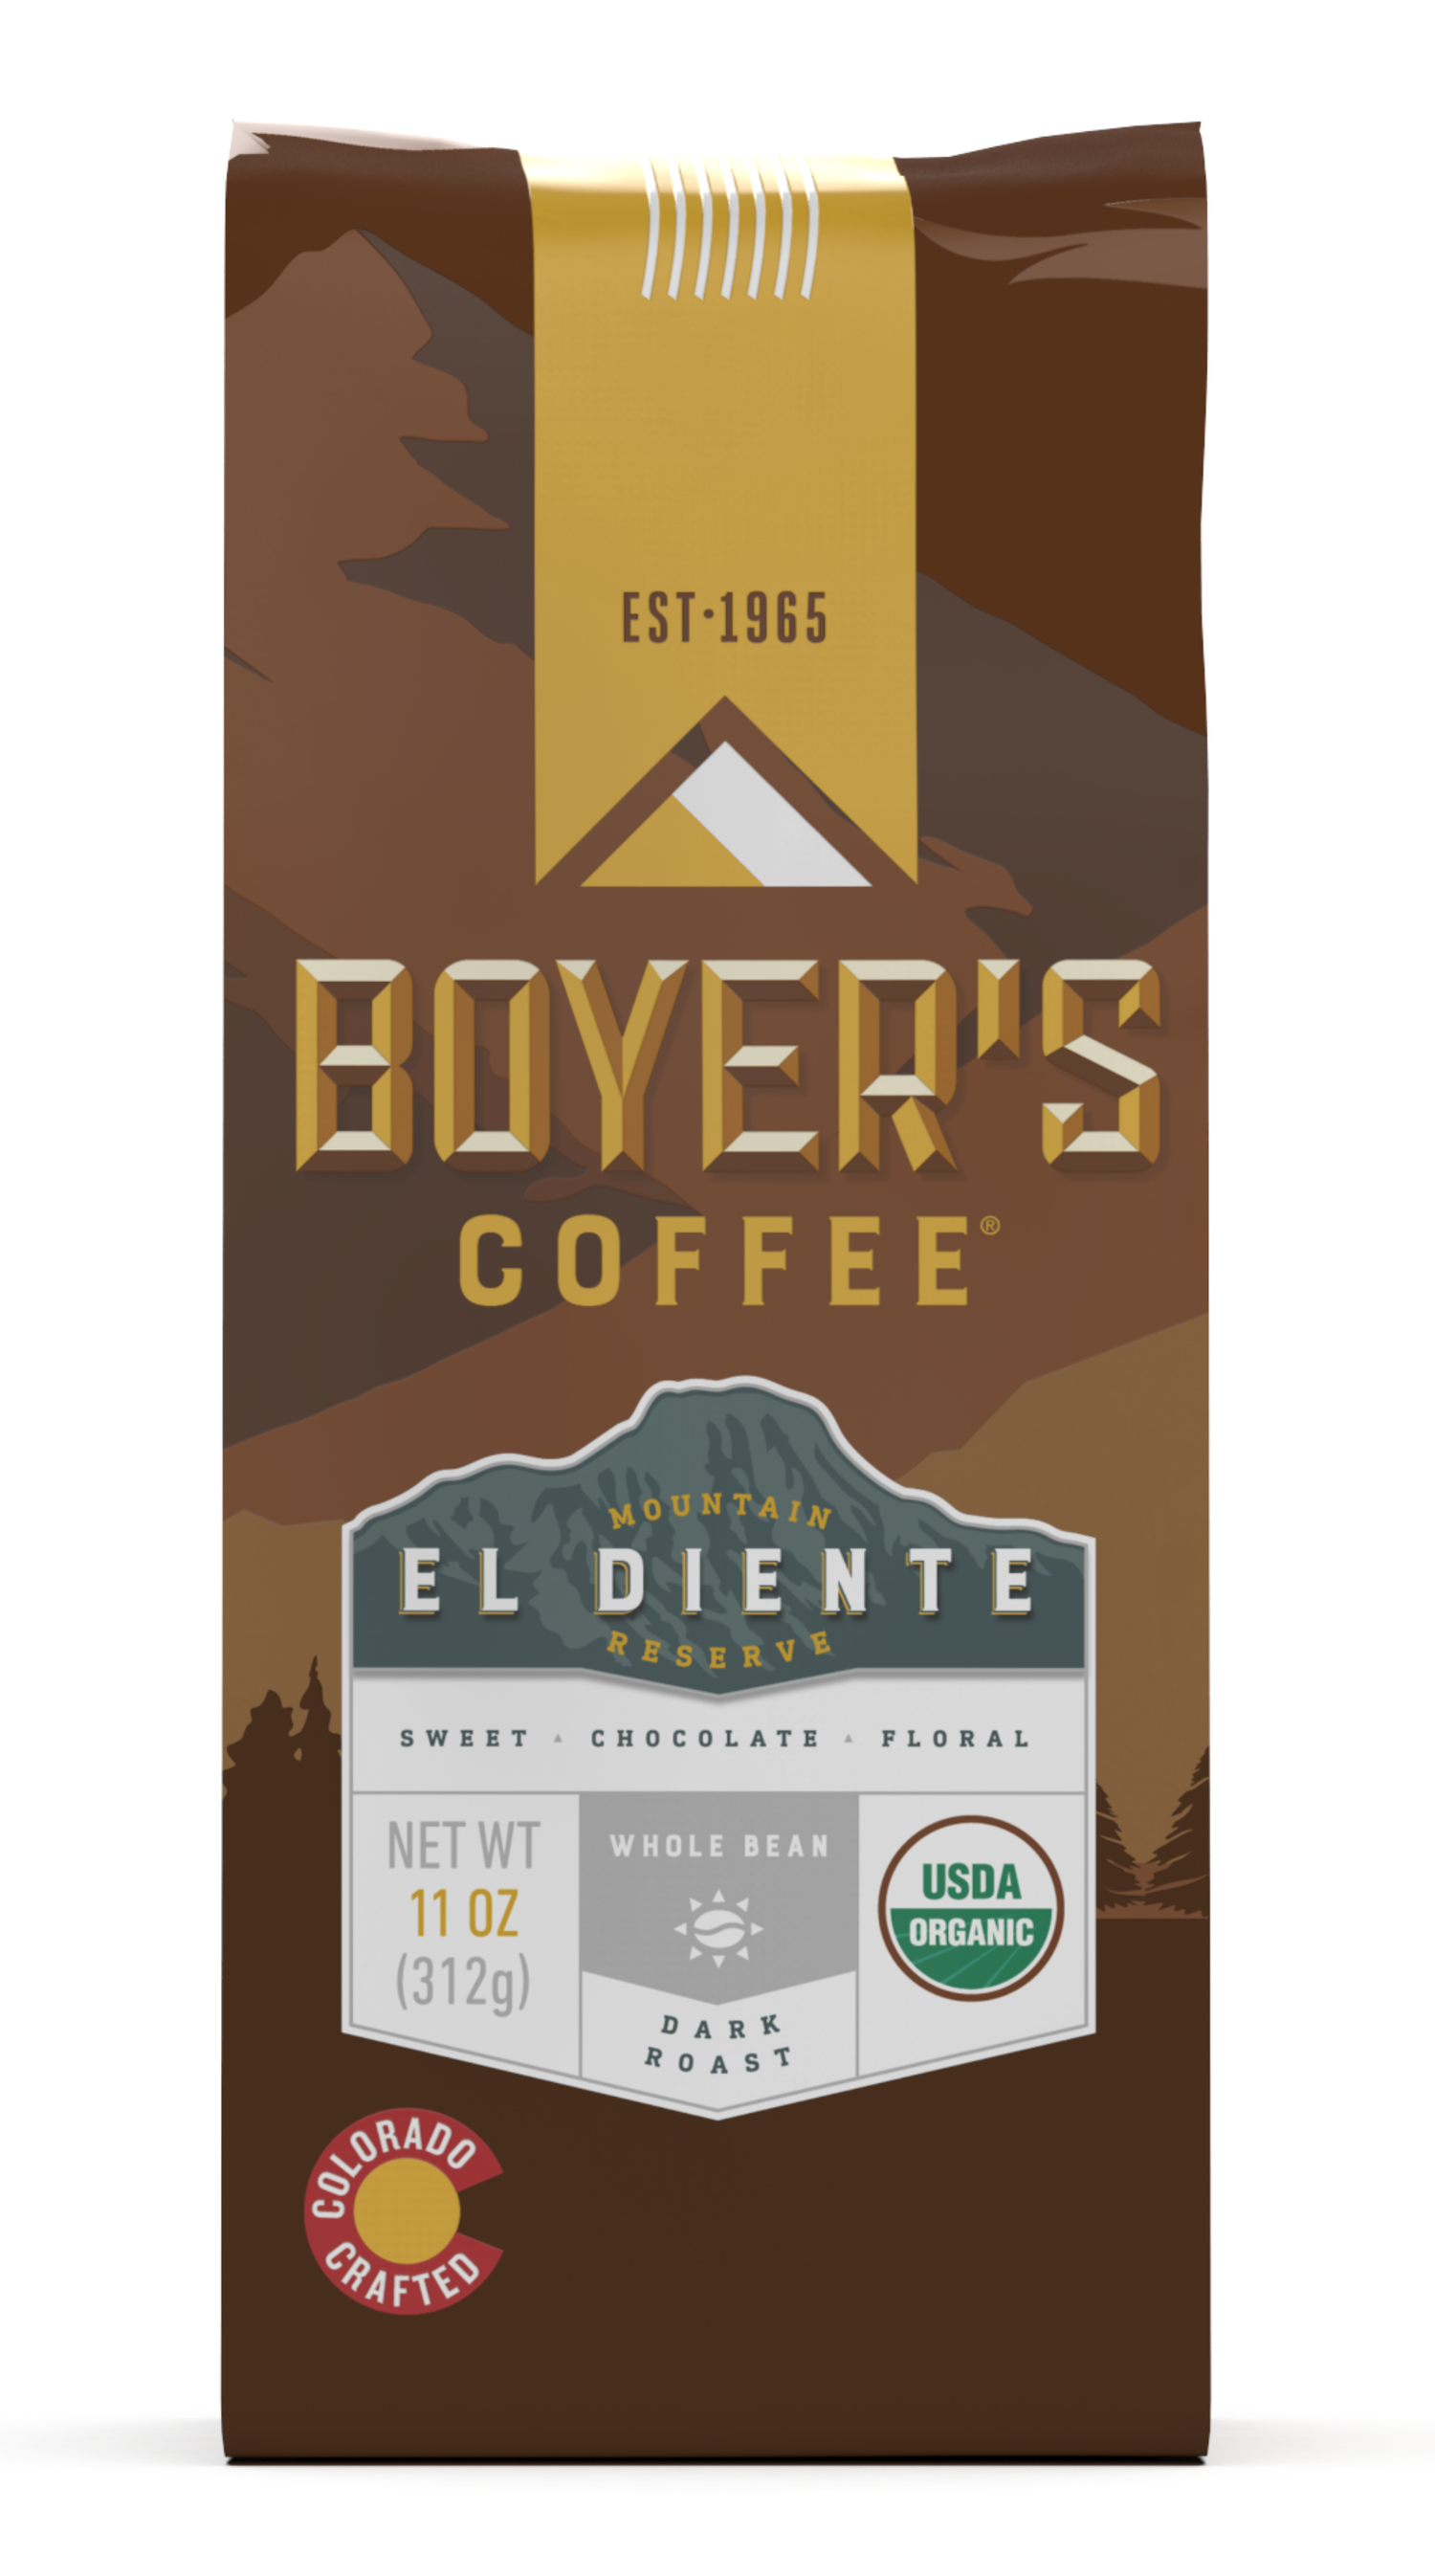 El Diente Mountain Reserve Coffee